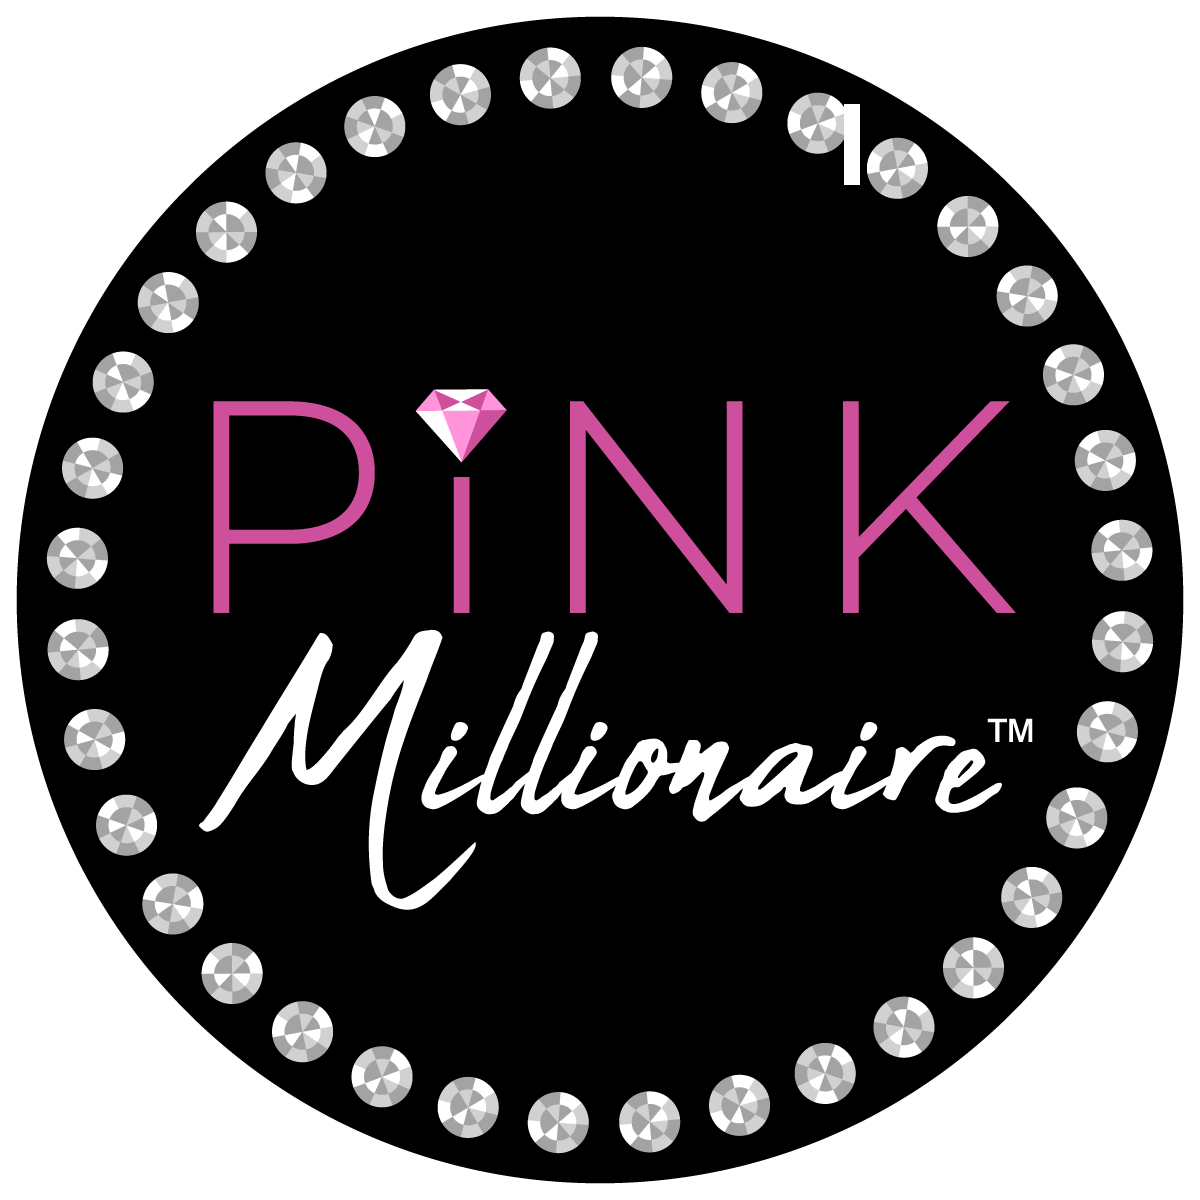 Pink Millionaire Club